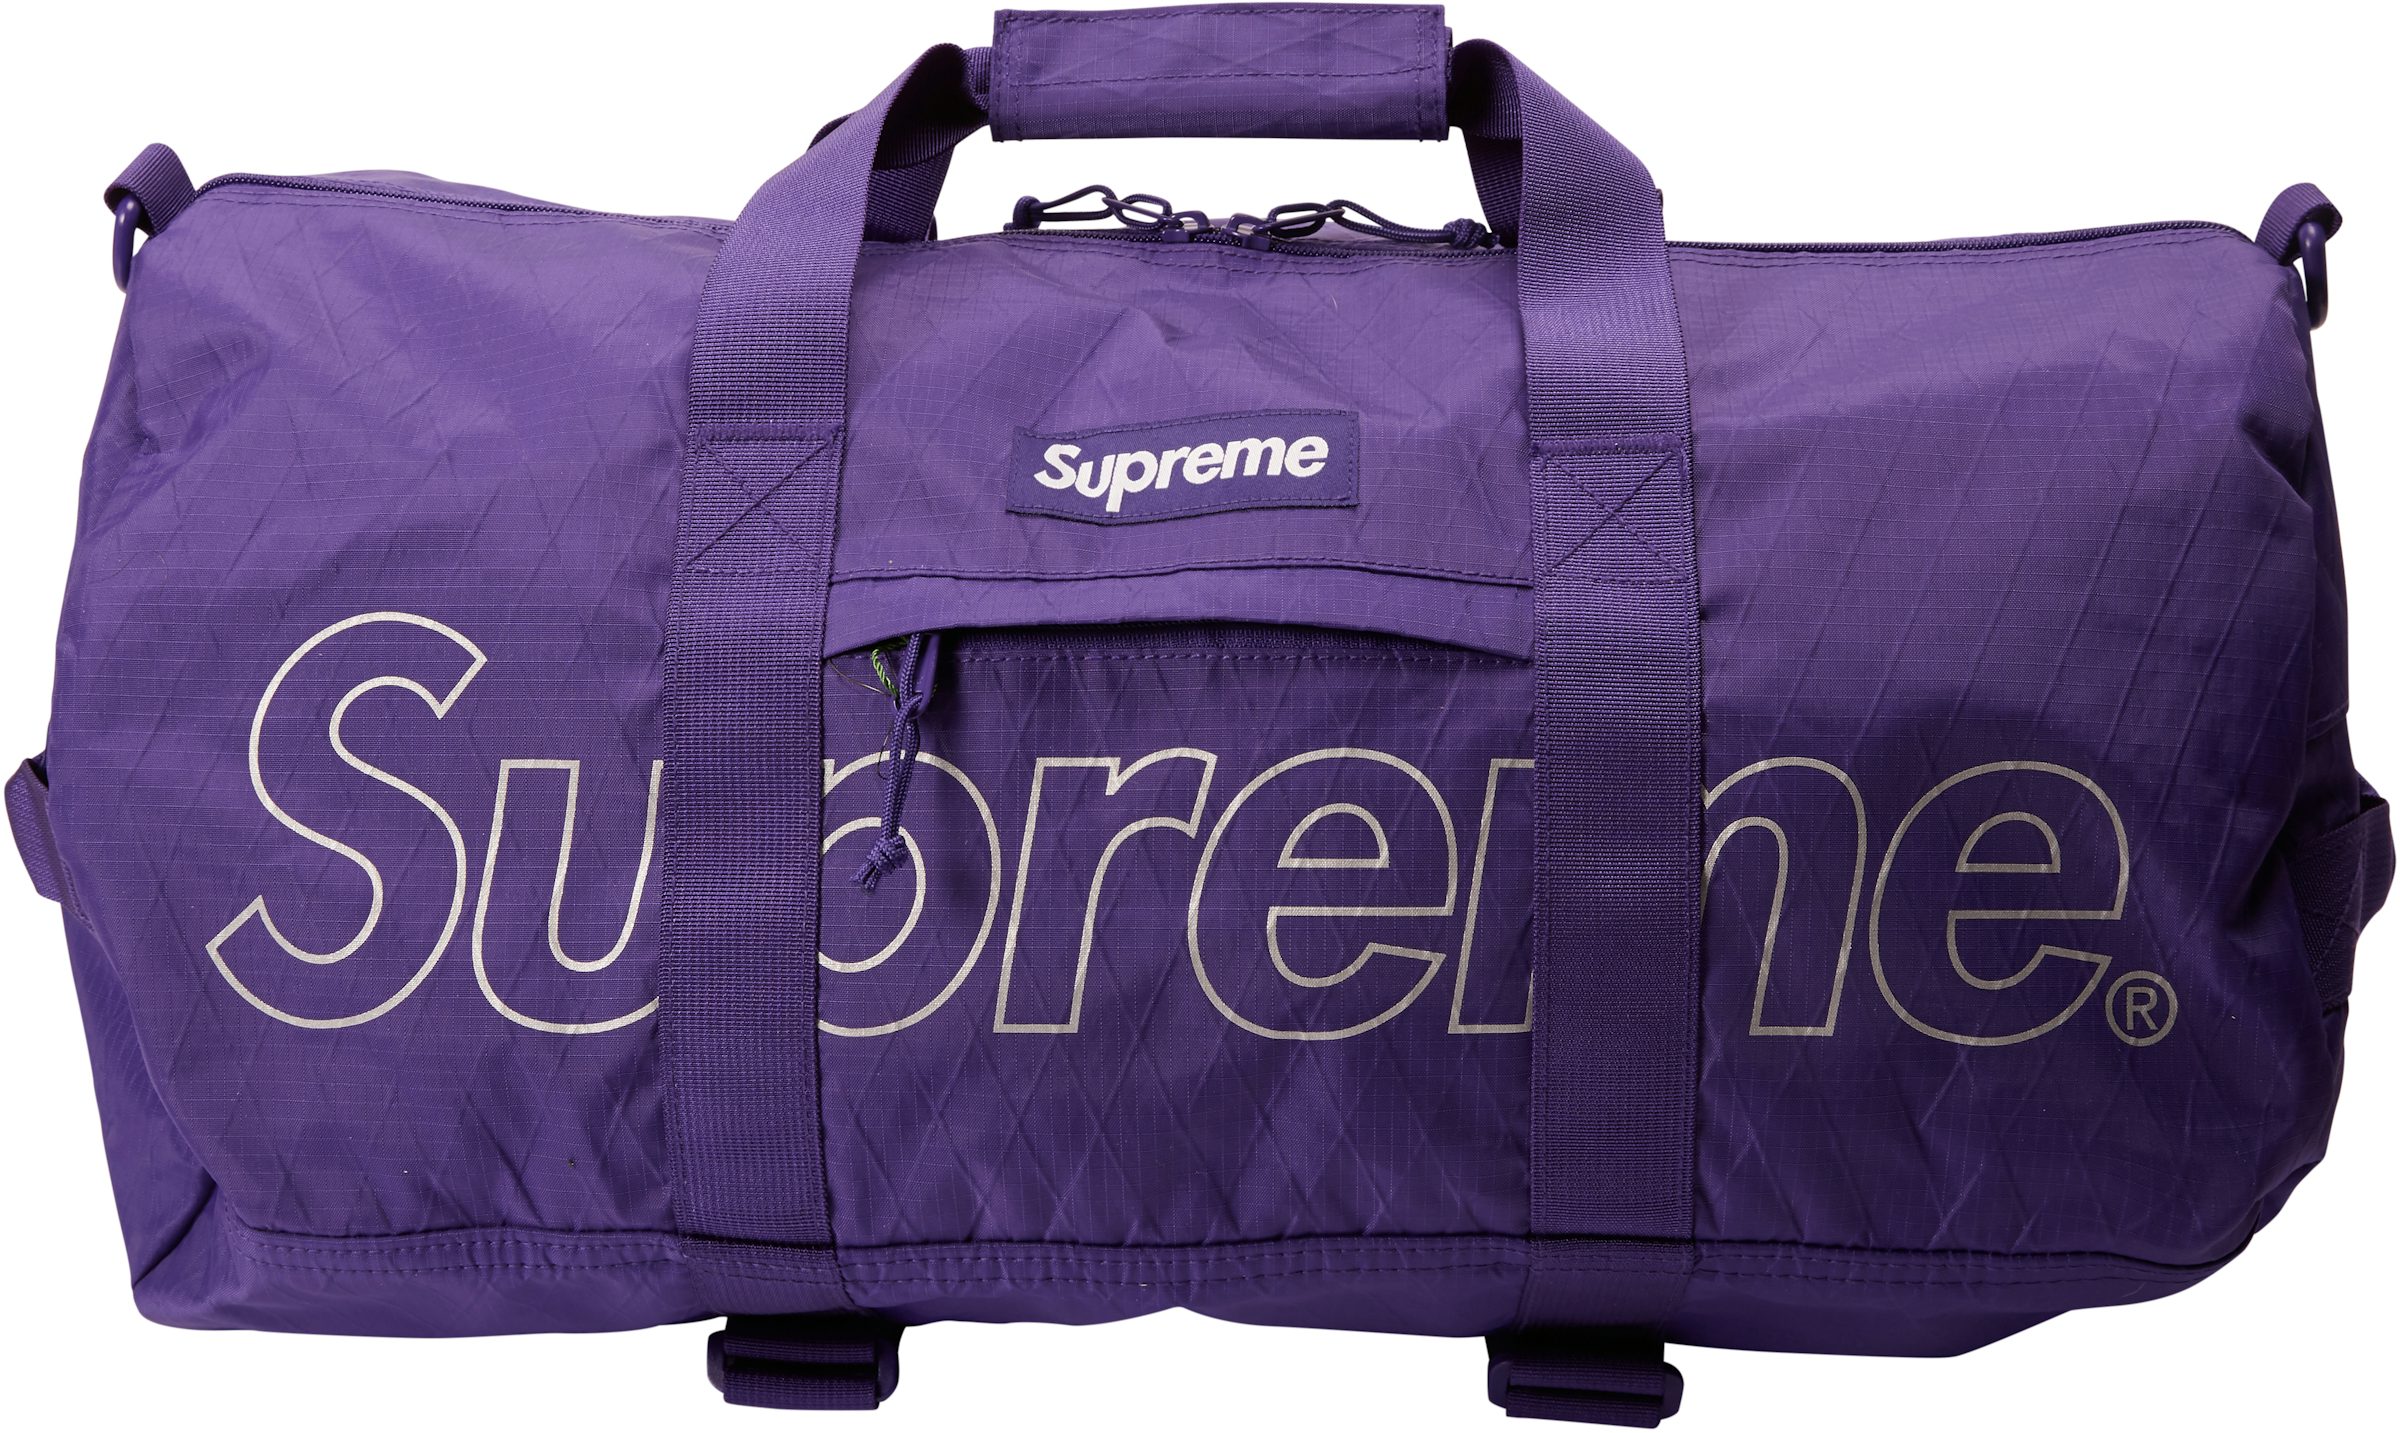 Supreme Duffle Bag FW18 drop 🔥🔥🔥SOLD🔥🔥🔥